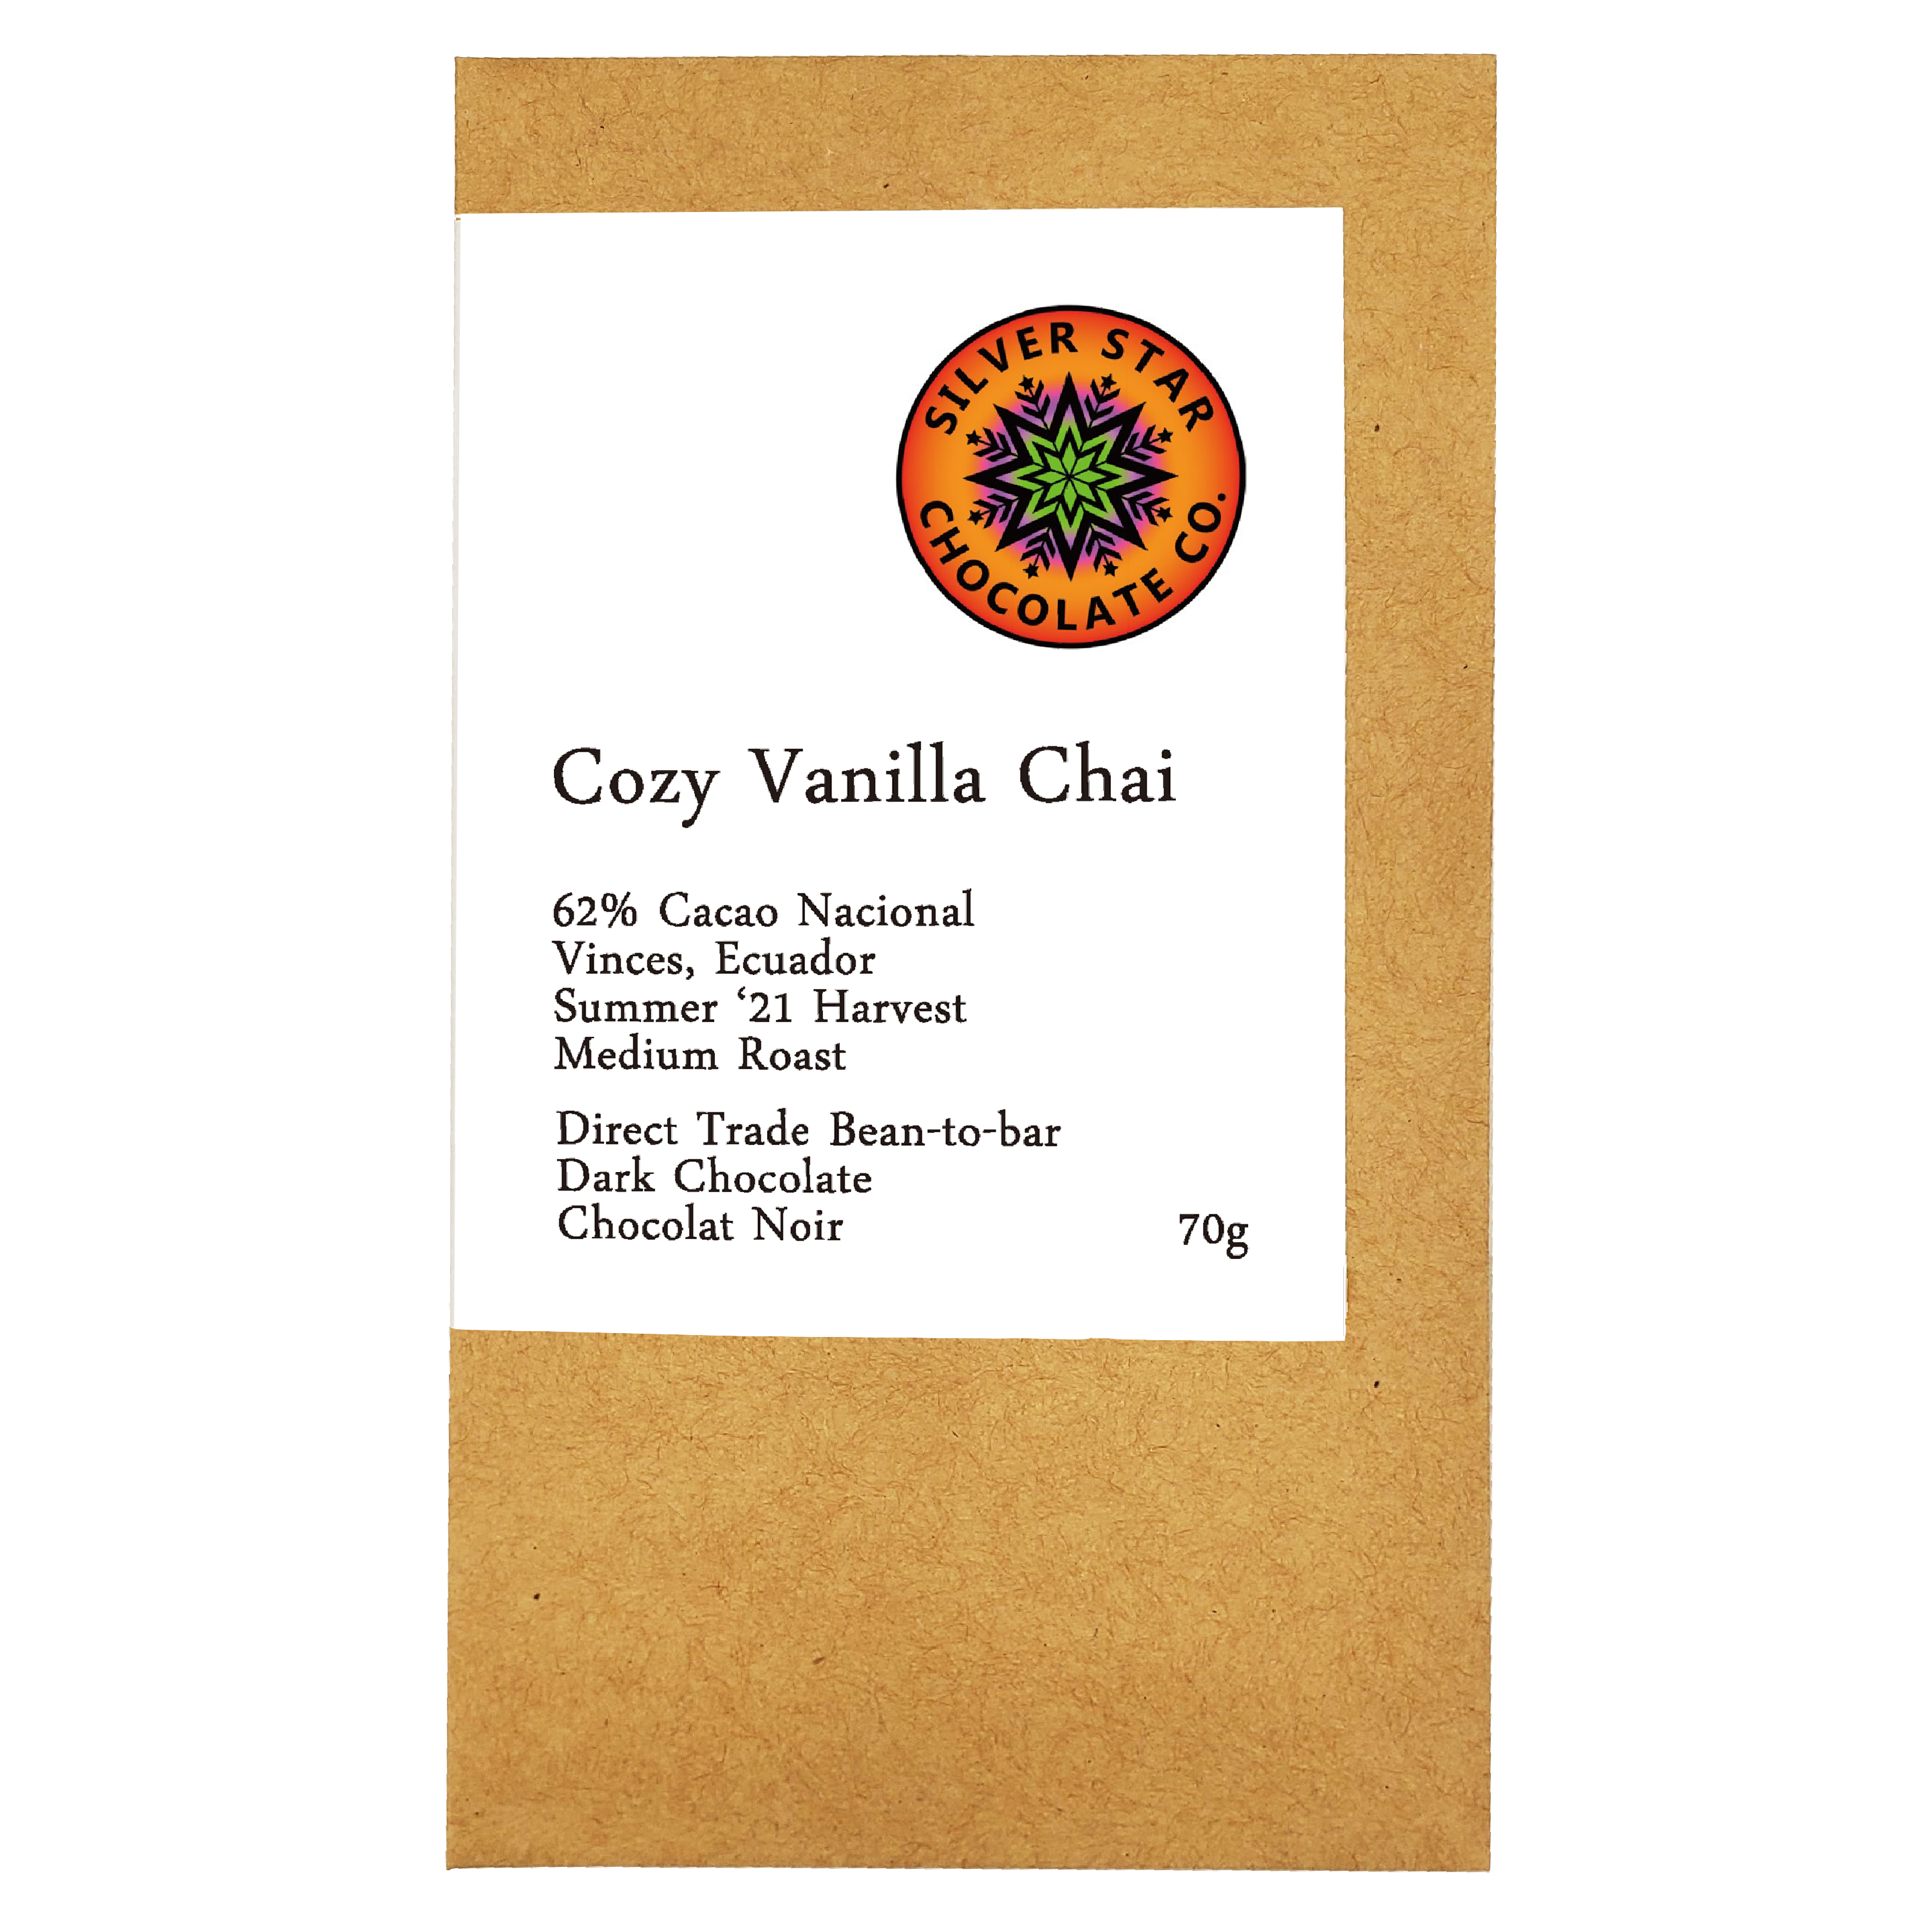 Cozy Vanilla Chai 62% Cacao